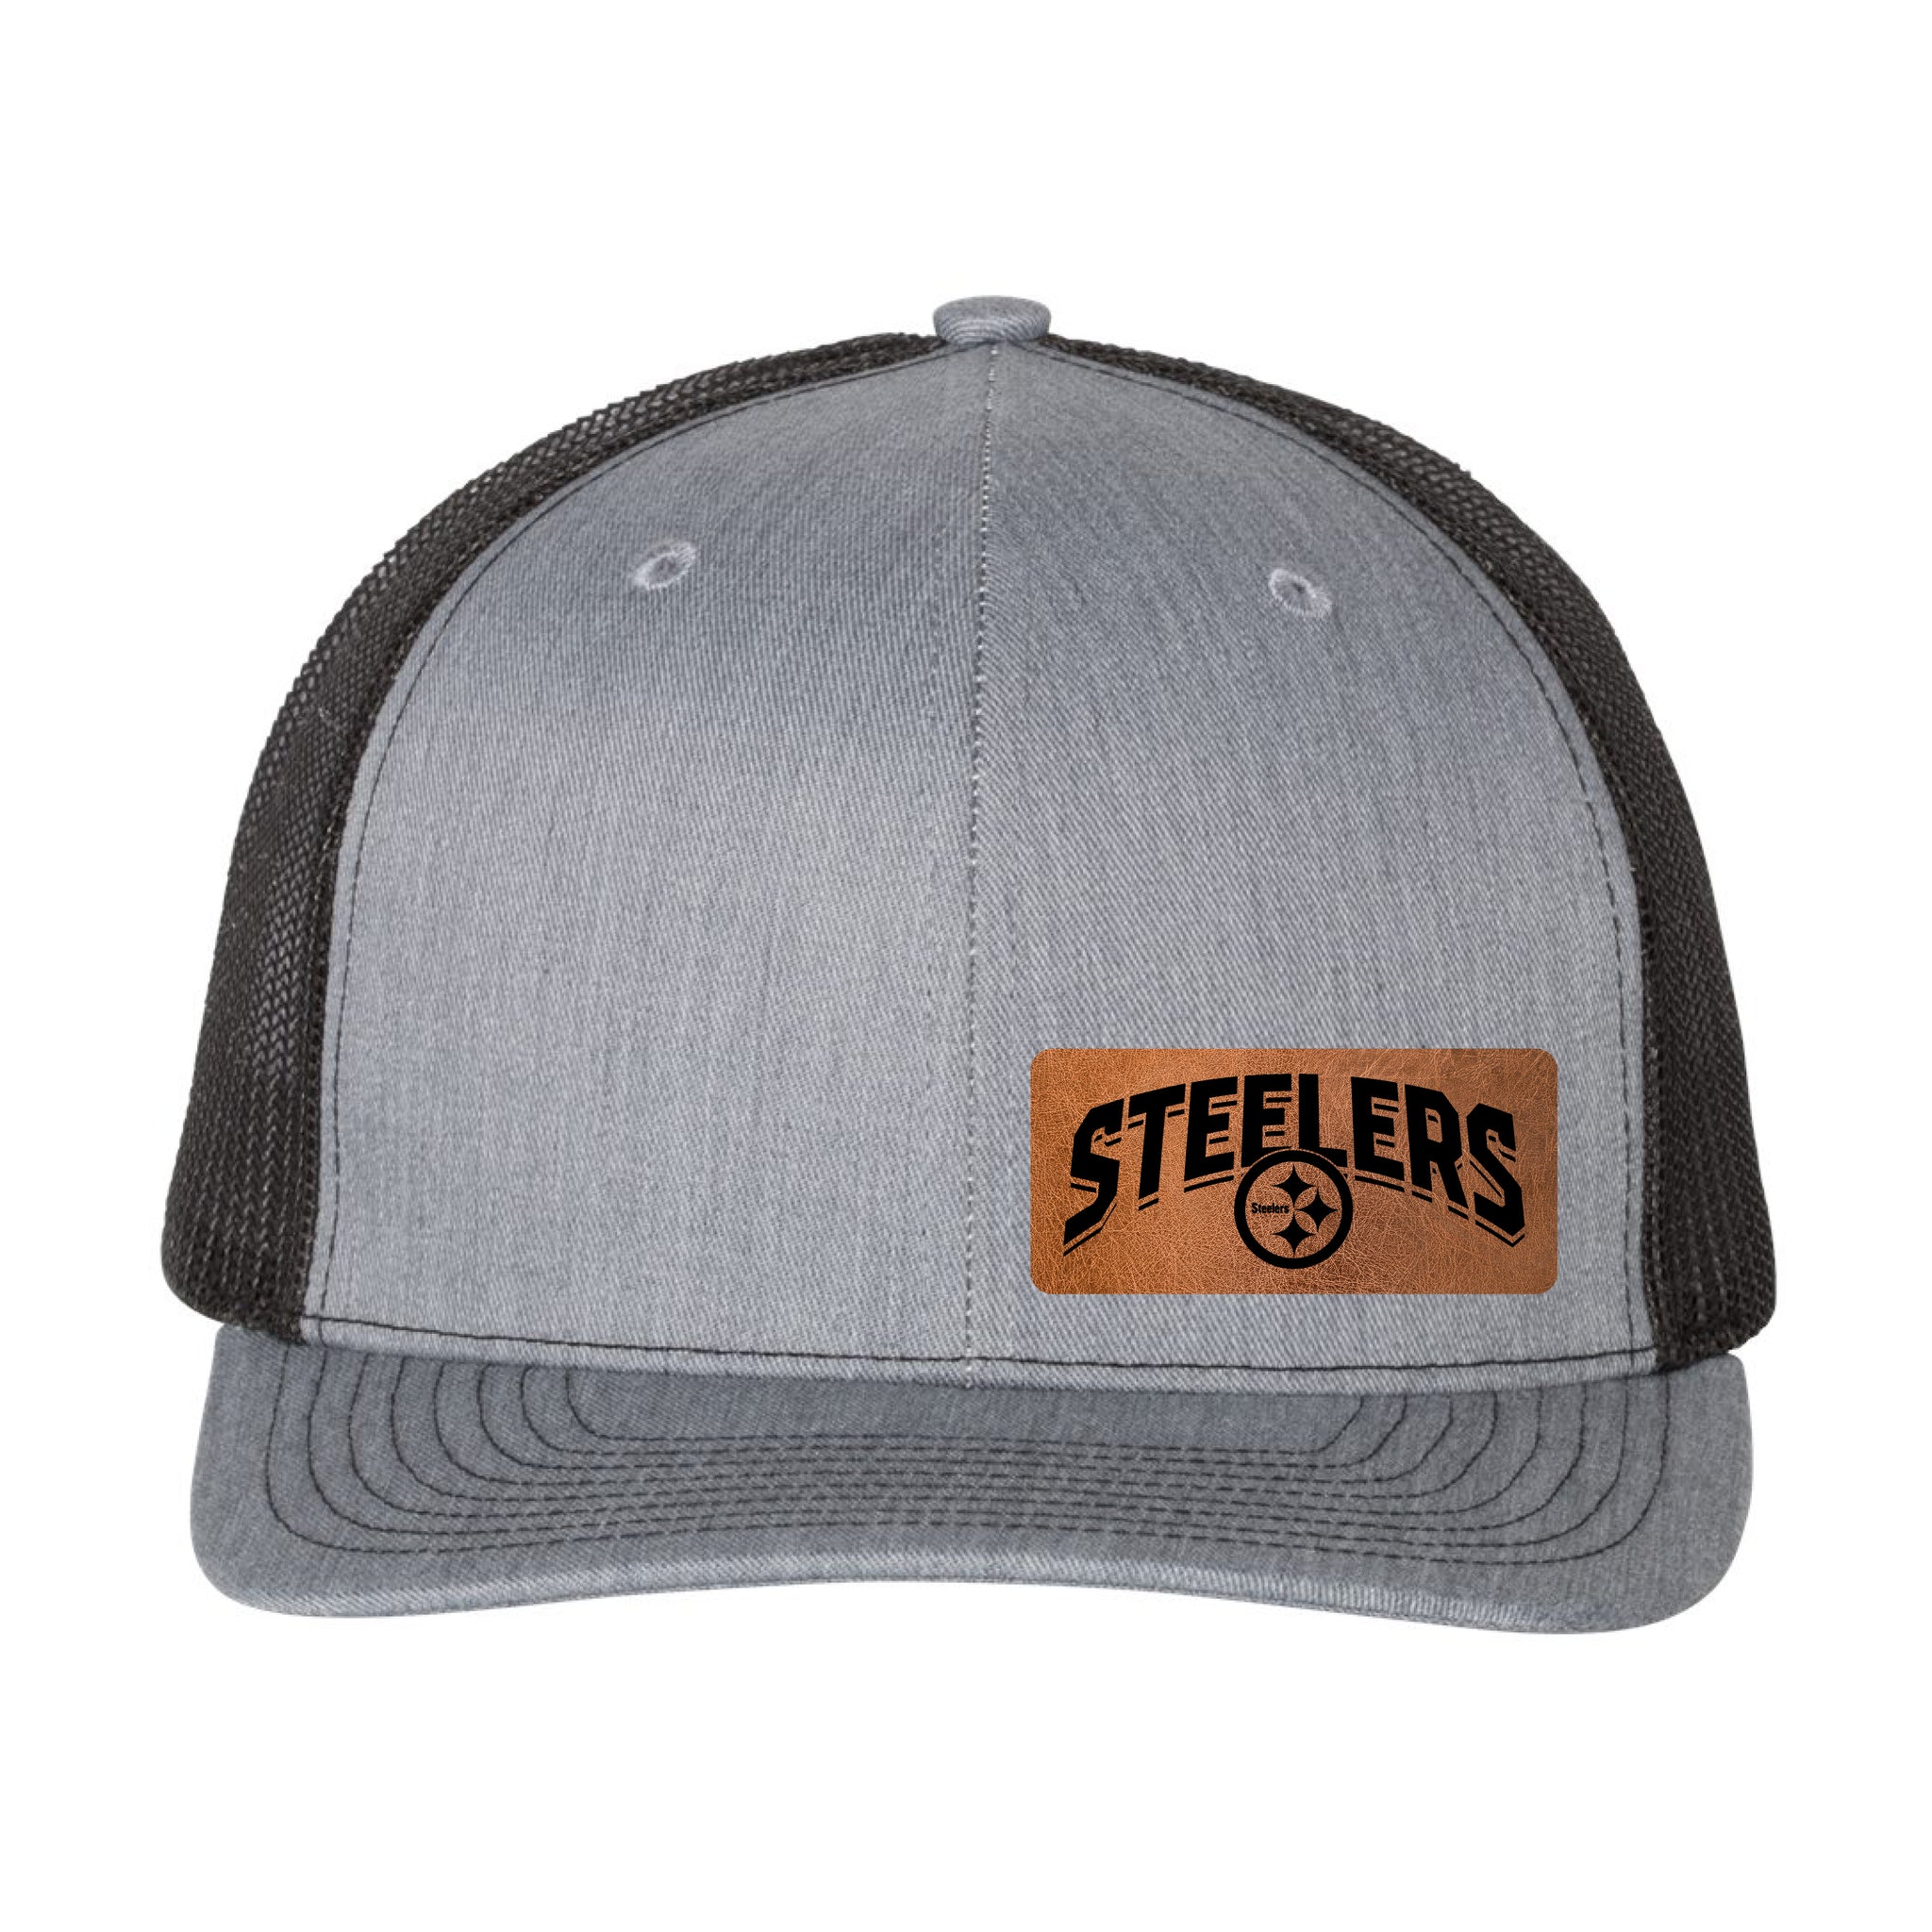 steelers ball cap